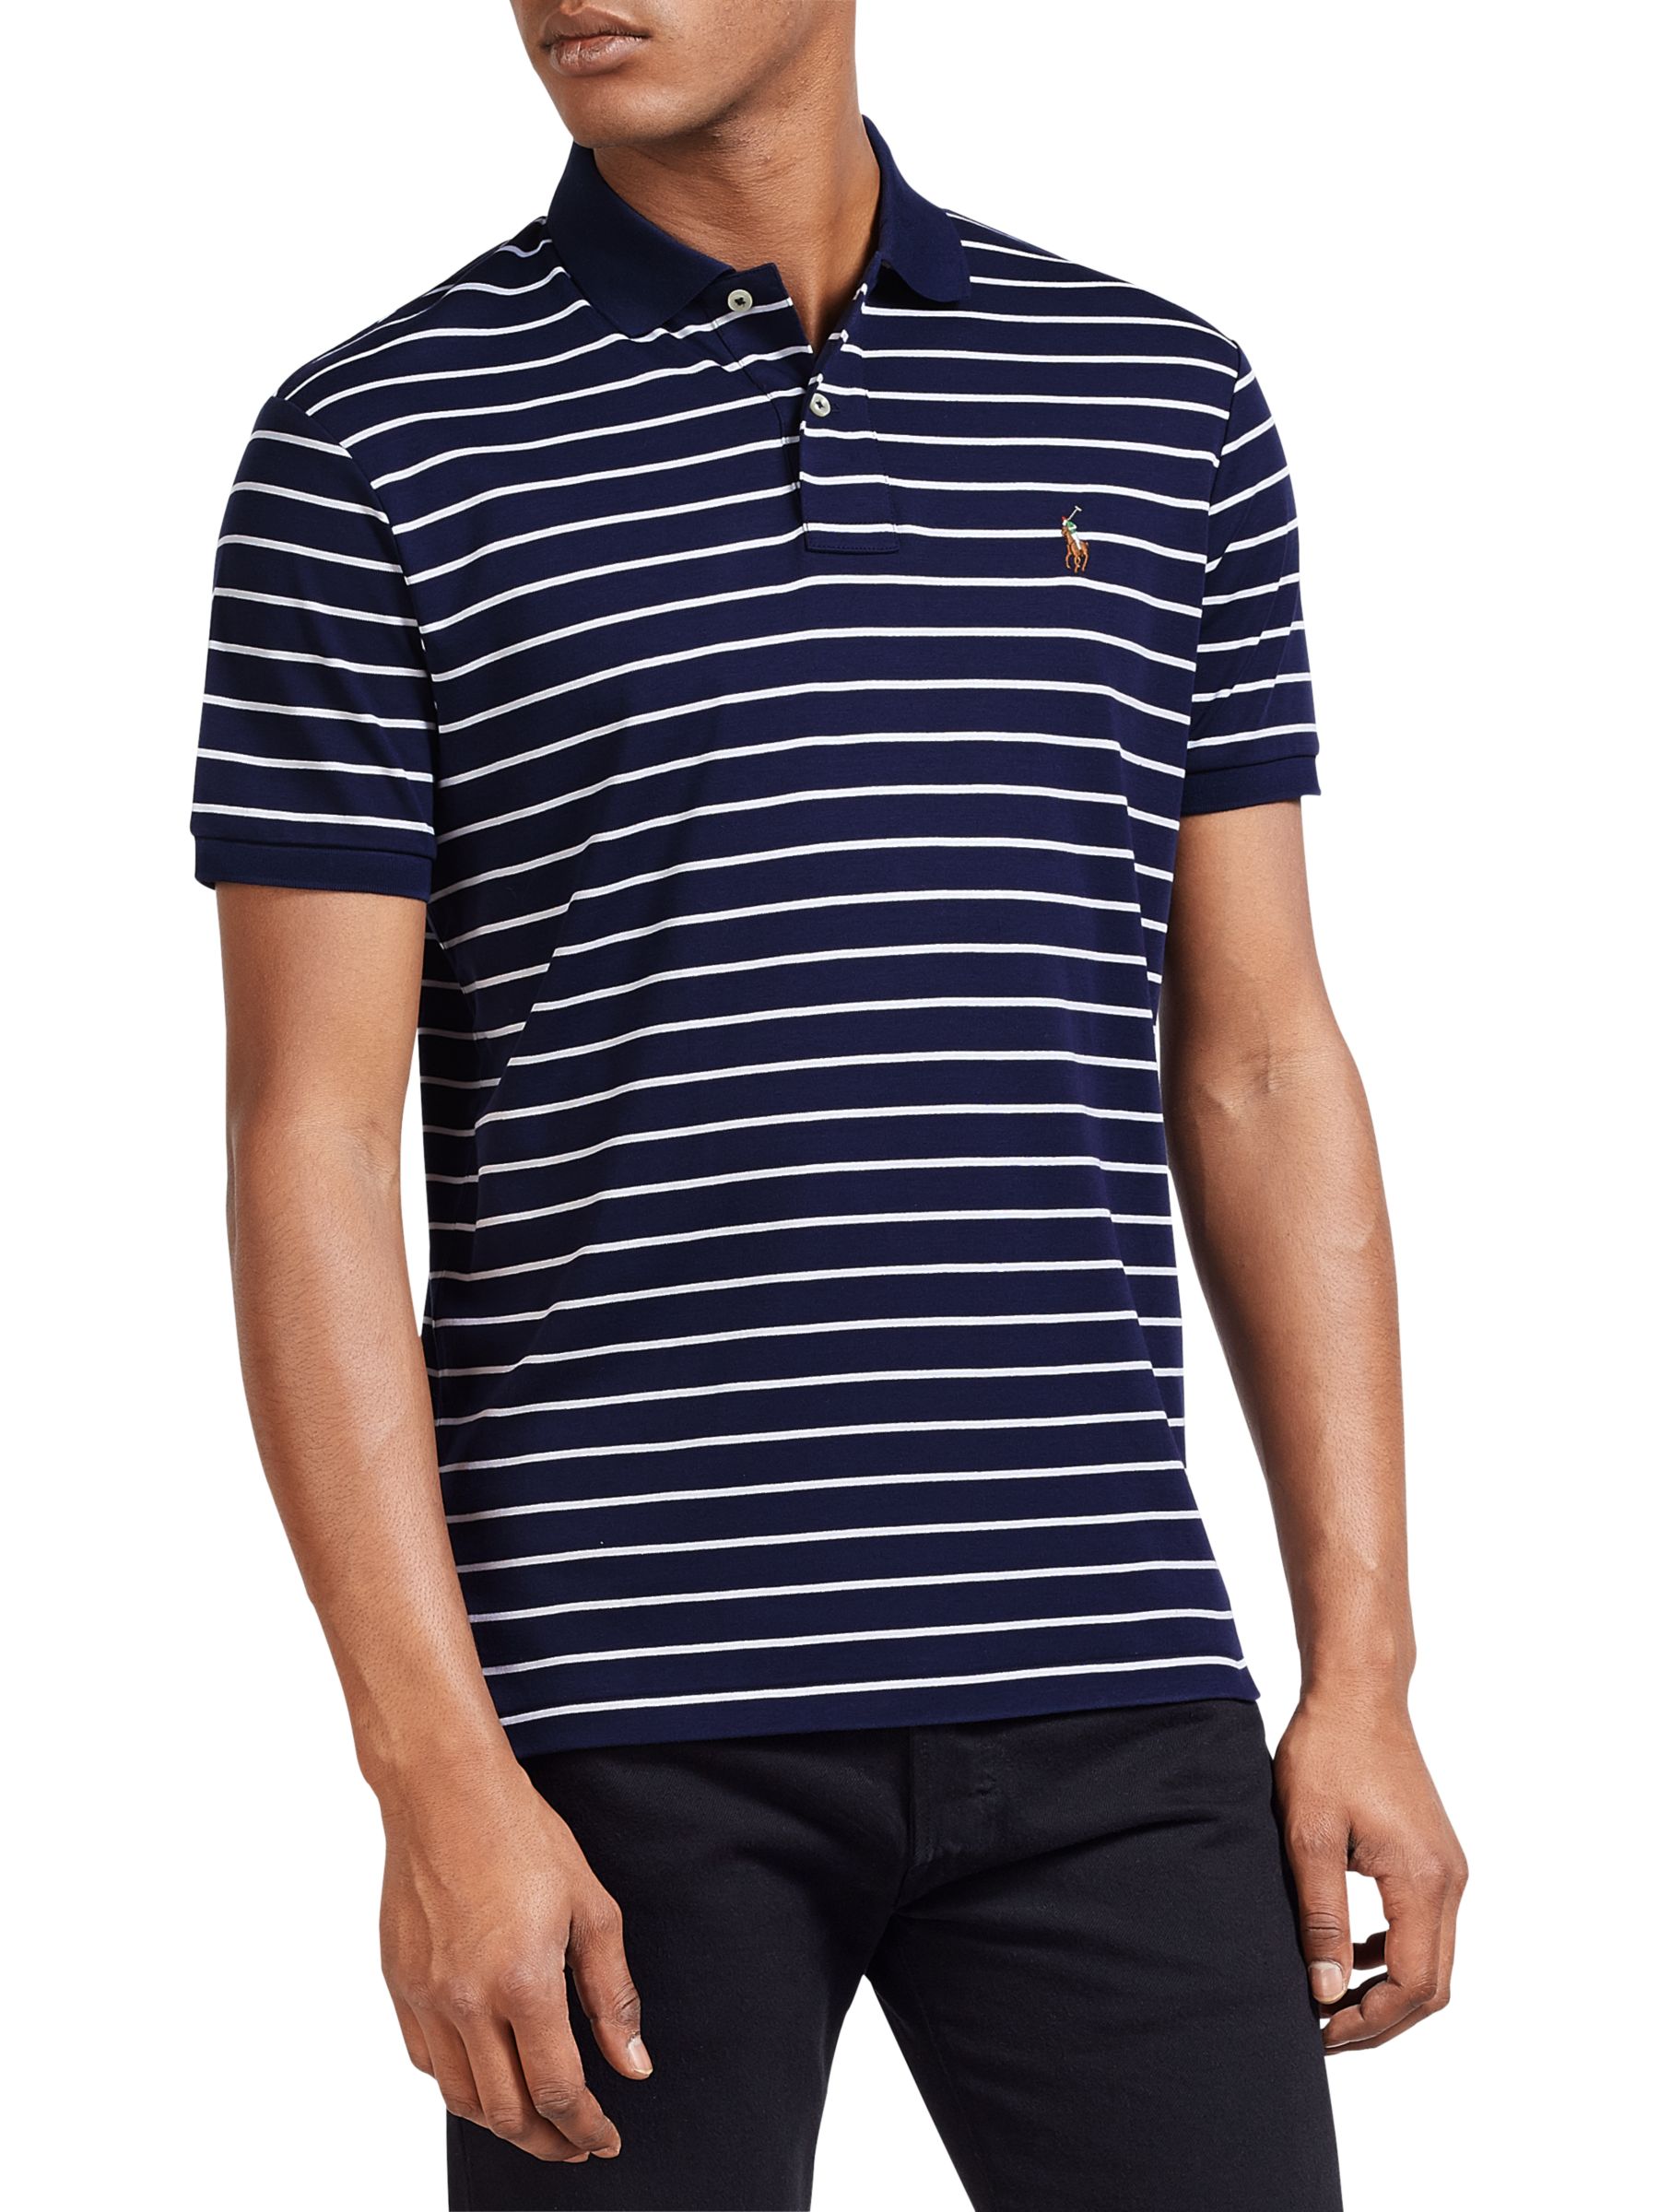 Polo Ralph Lauren Custom Fit Striped Soft-Touch Pima Cotton Polo Shirt